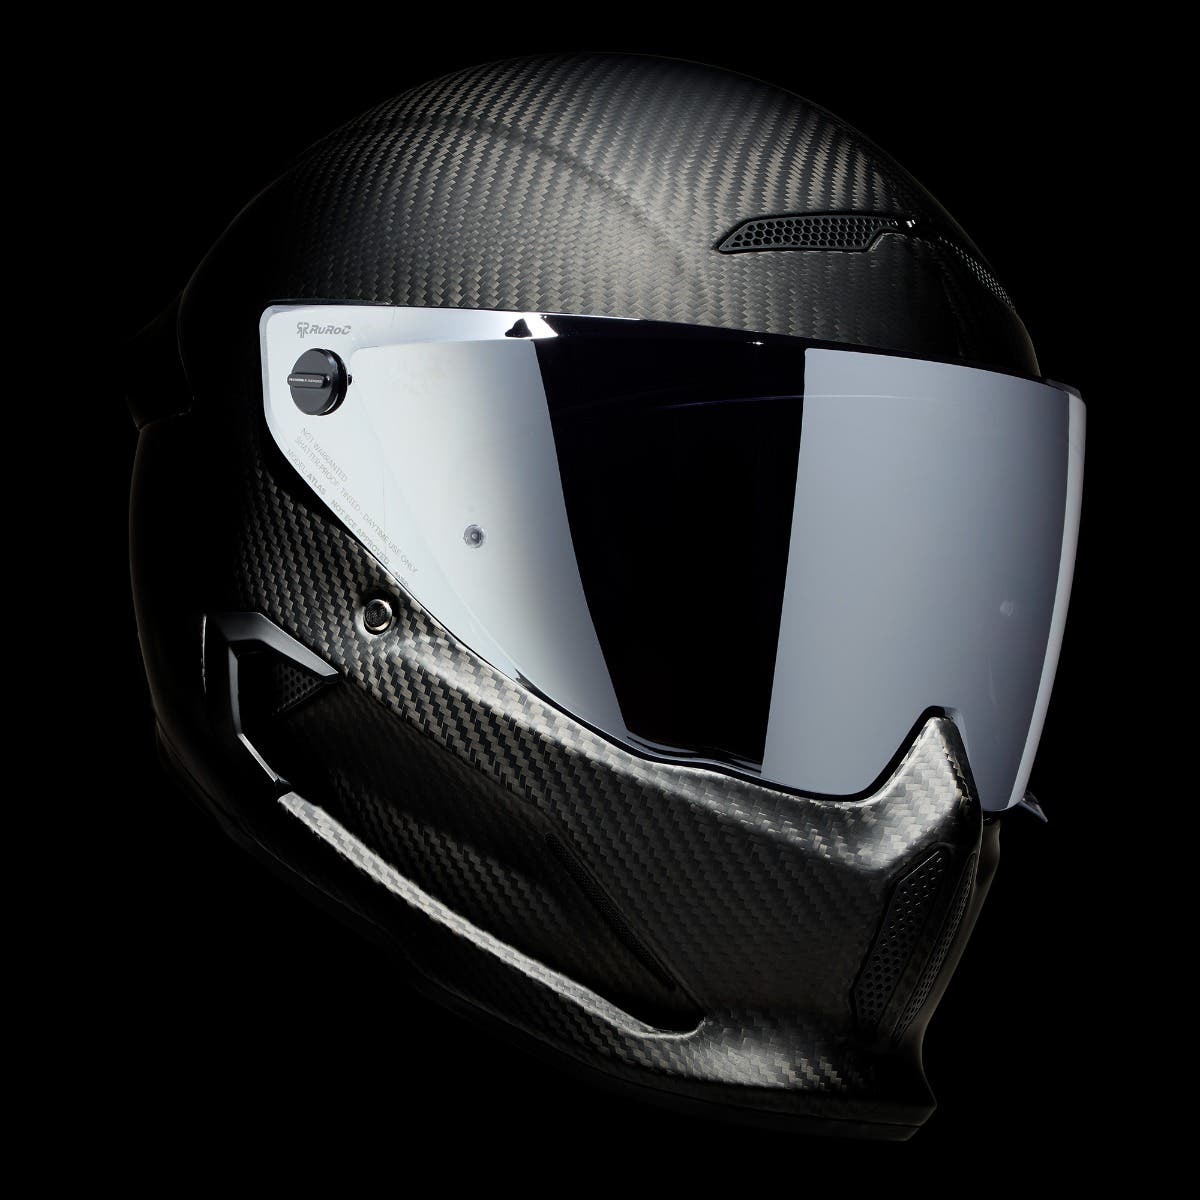 ATLAS 4.0 Raw Carbon - Motorcycle Helmet - Ruroc